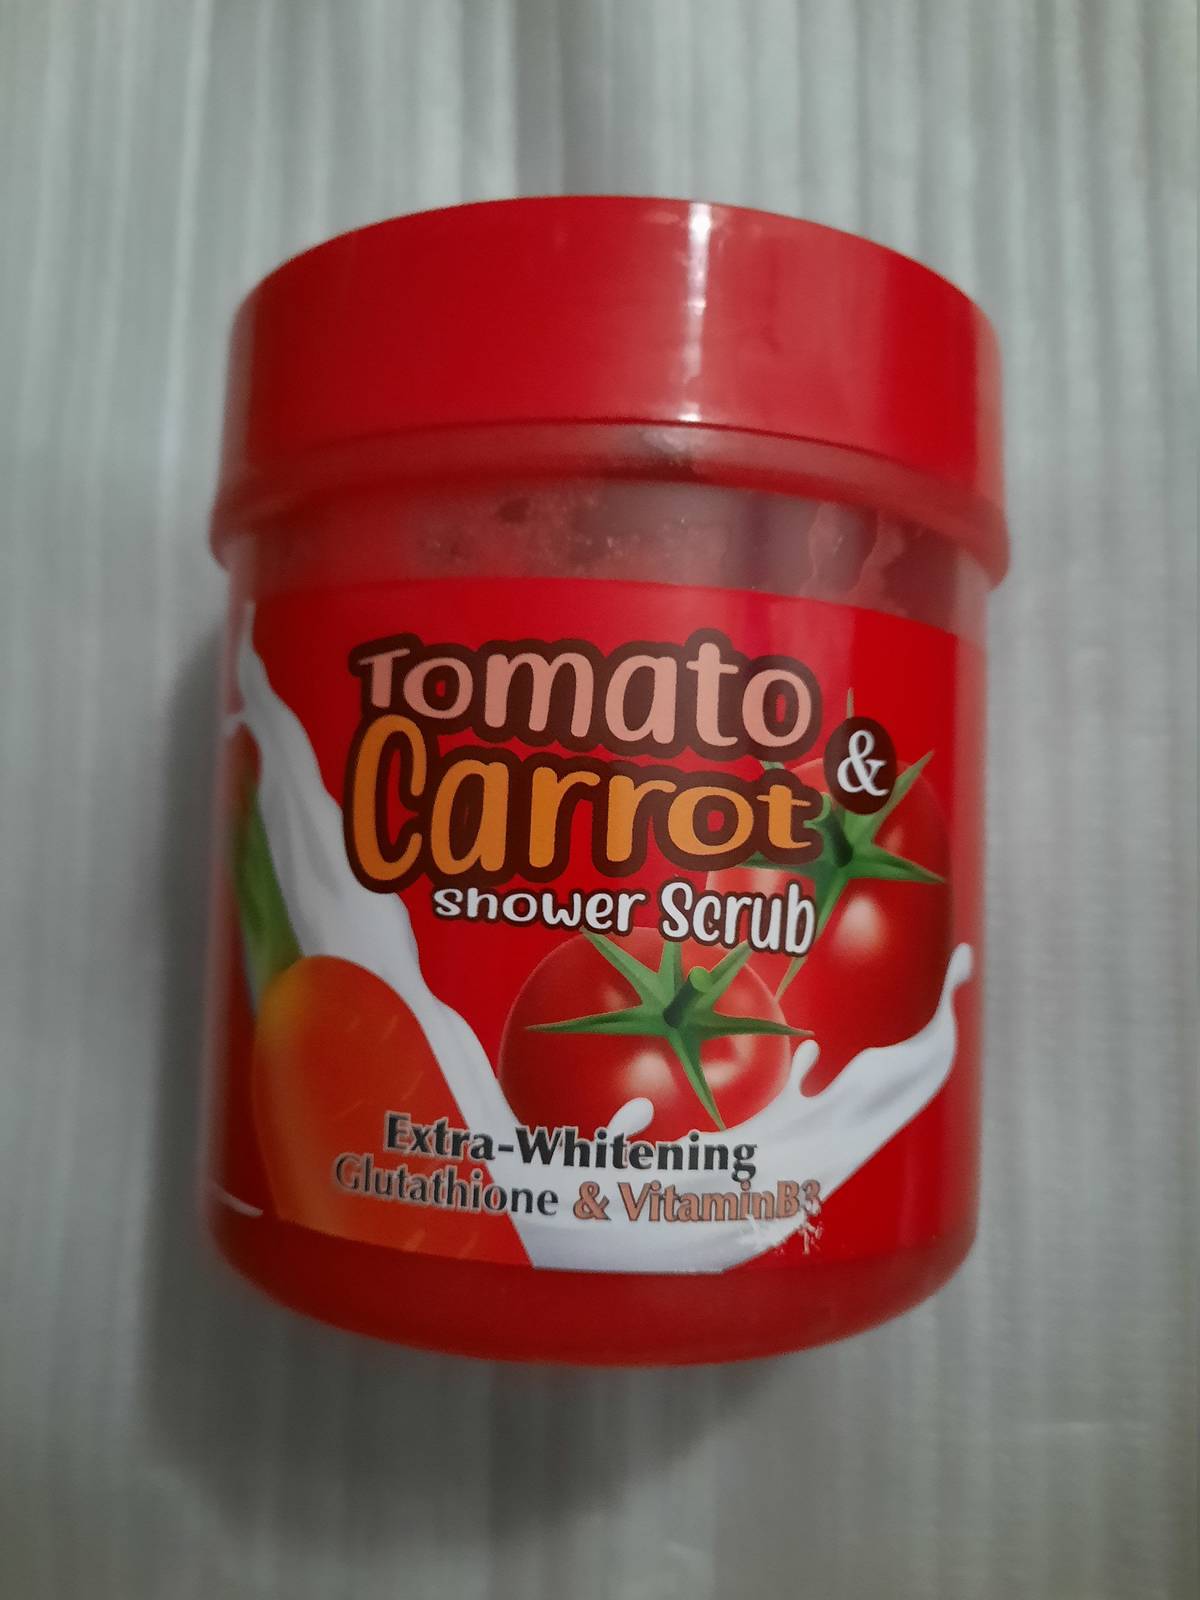 R & D care xtra whitening tomato carrot glutathione shower scrub+ vit B3.700G - $32.00